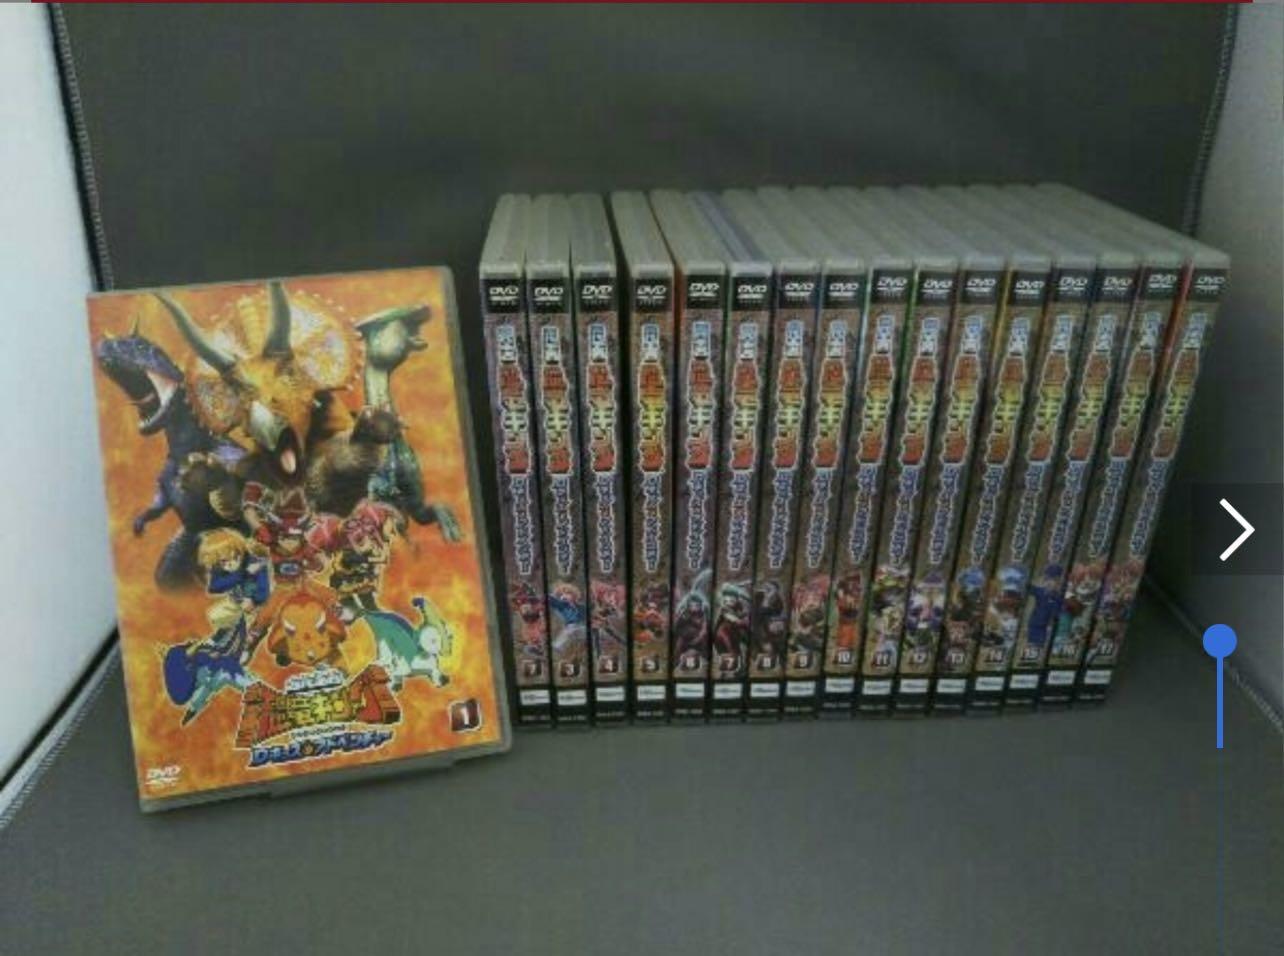 Dinosaur King DVD (Japanese edition)